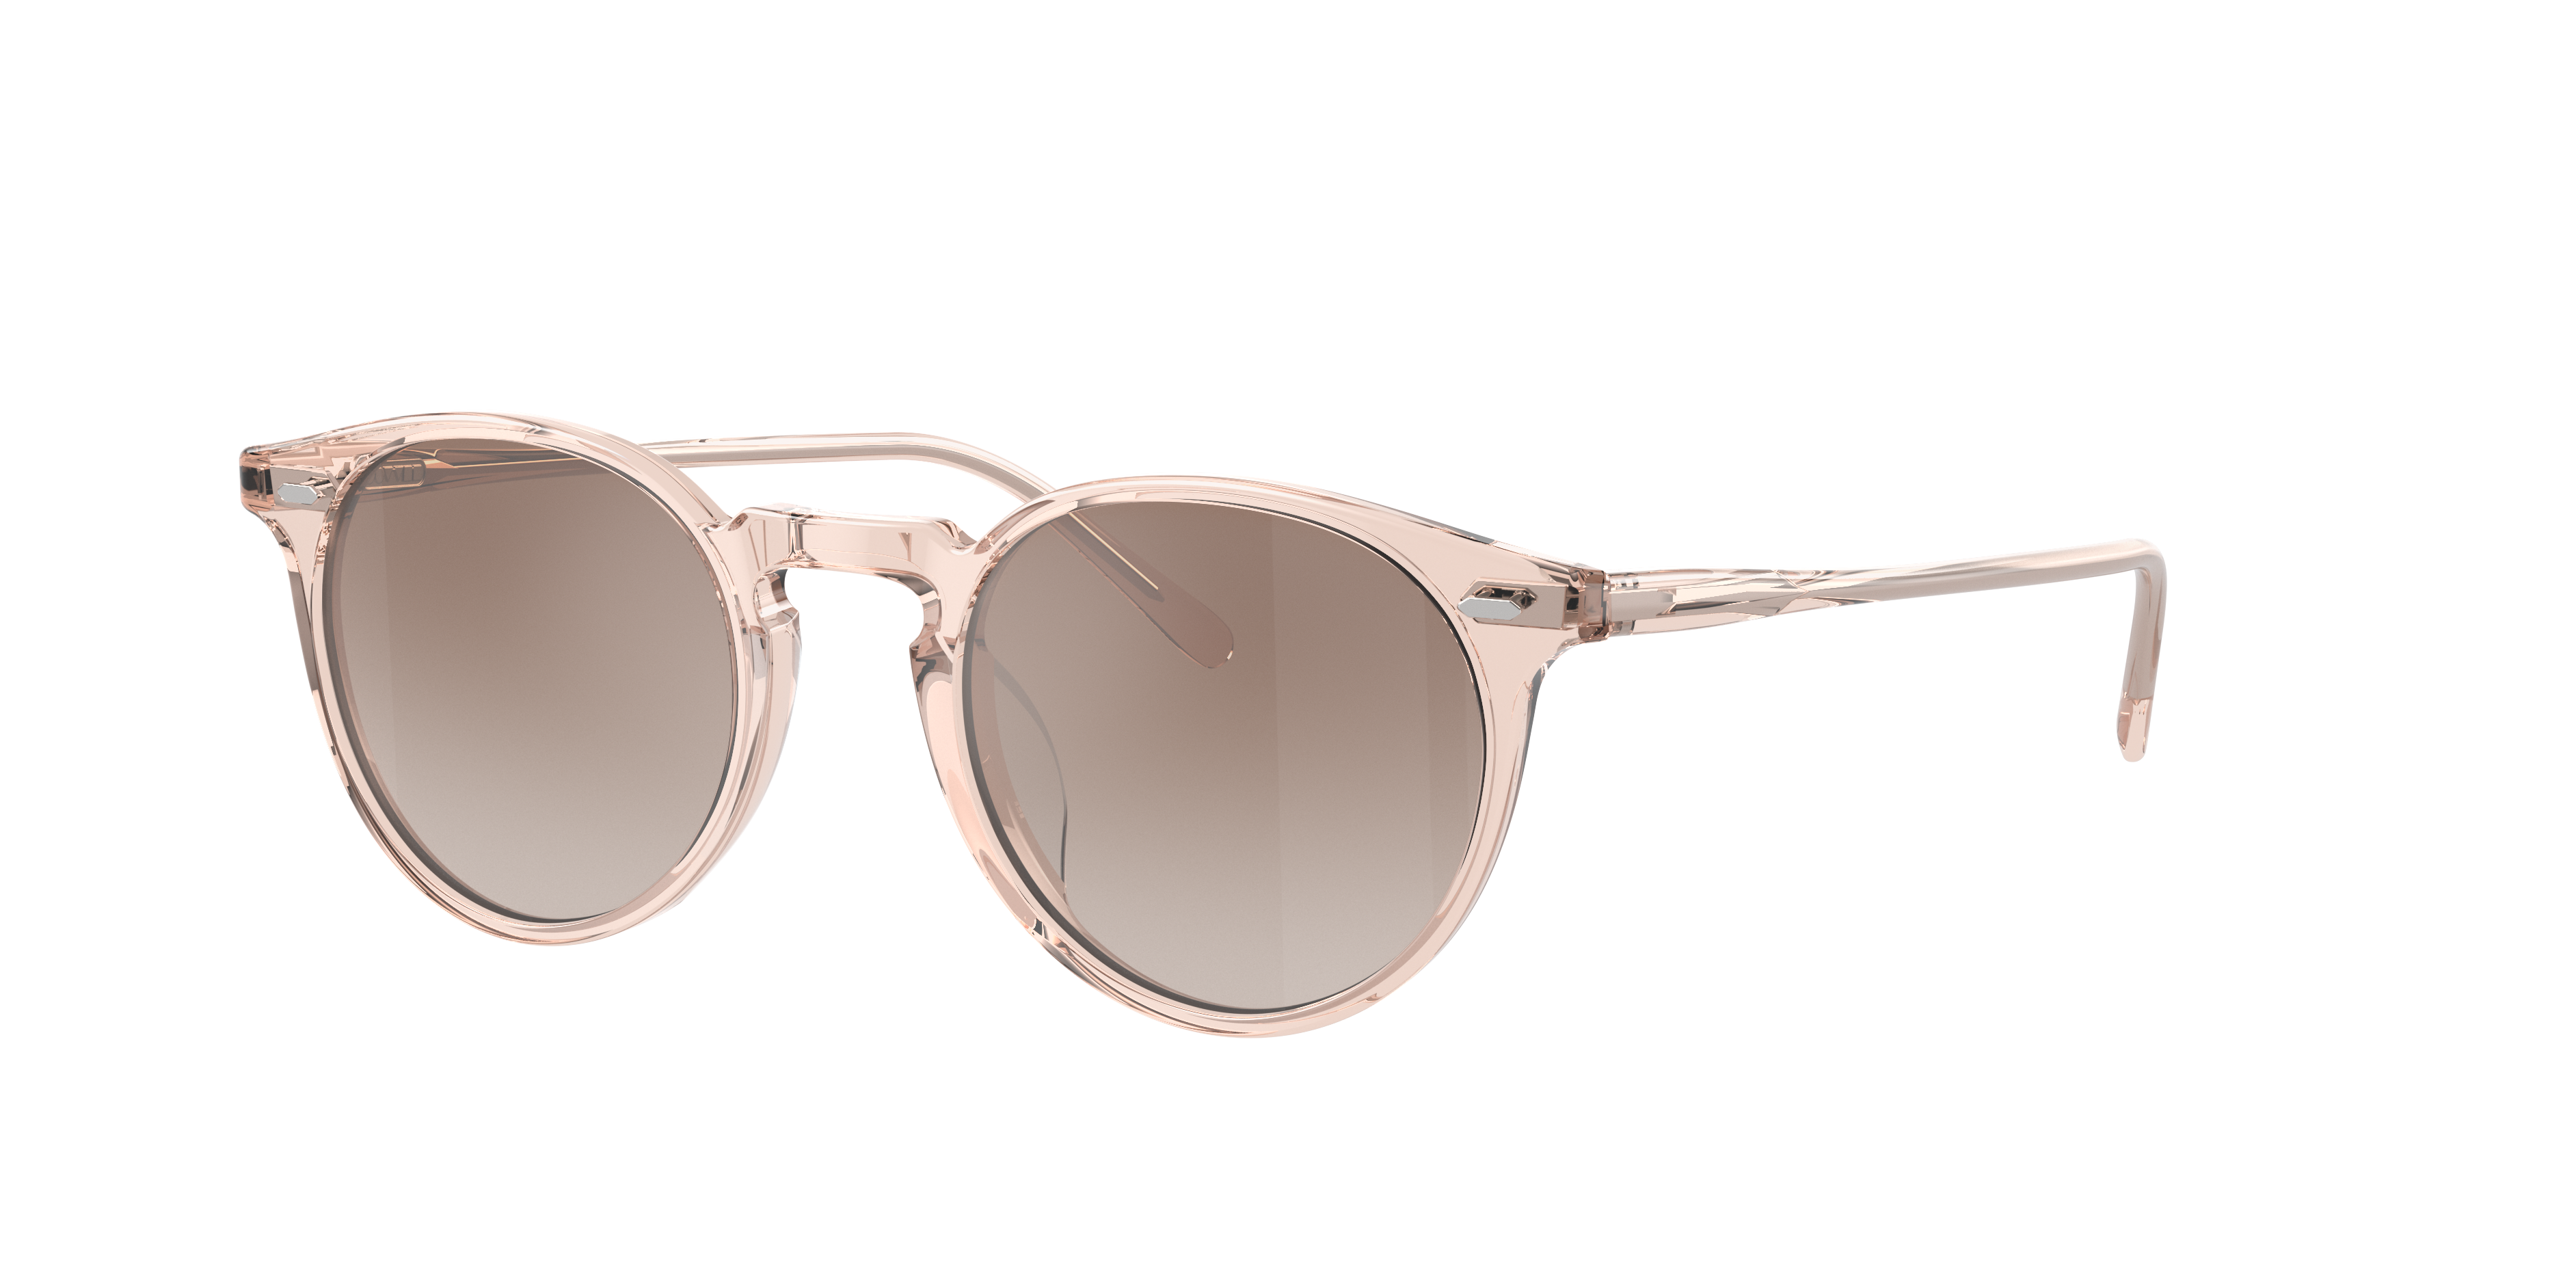 OLIVER PEOPLES OV5529SU N.02 Sun Cherry Blossom - Unisex Luxury Sunglasses,  Tuscan Brown Gradient Mirror Lens